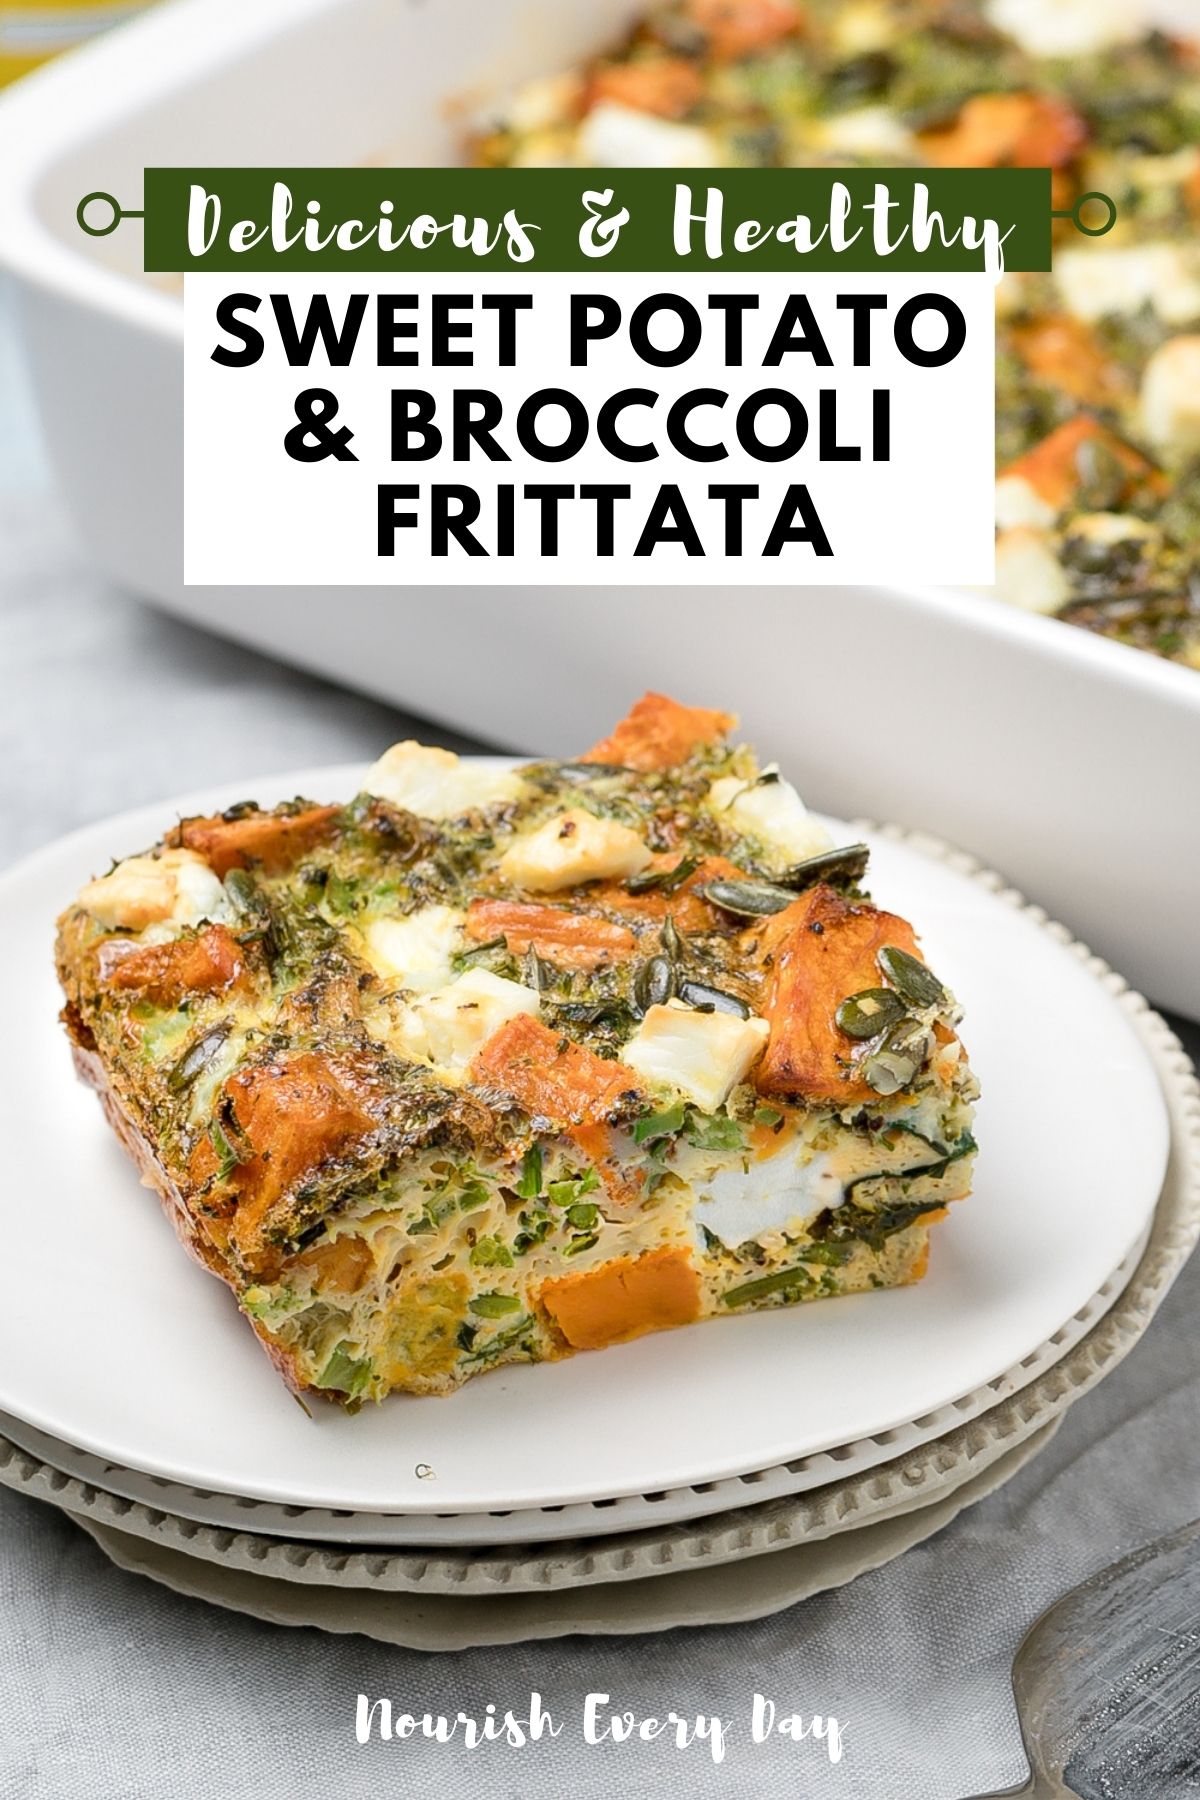 Sweet Potato and Broccoli Frittata Recipe by Nourish Every Day